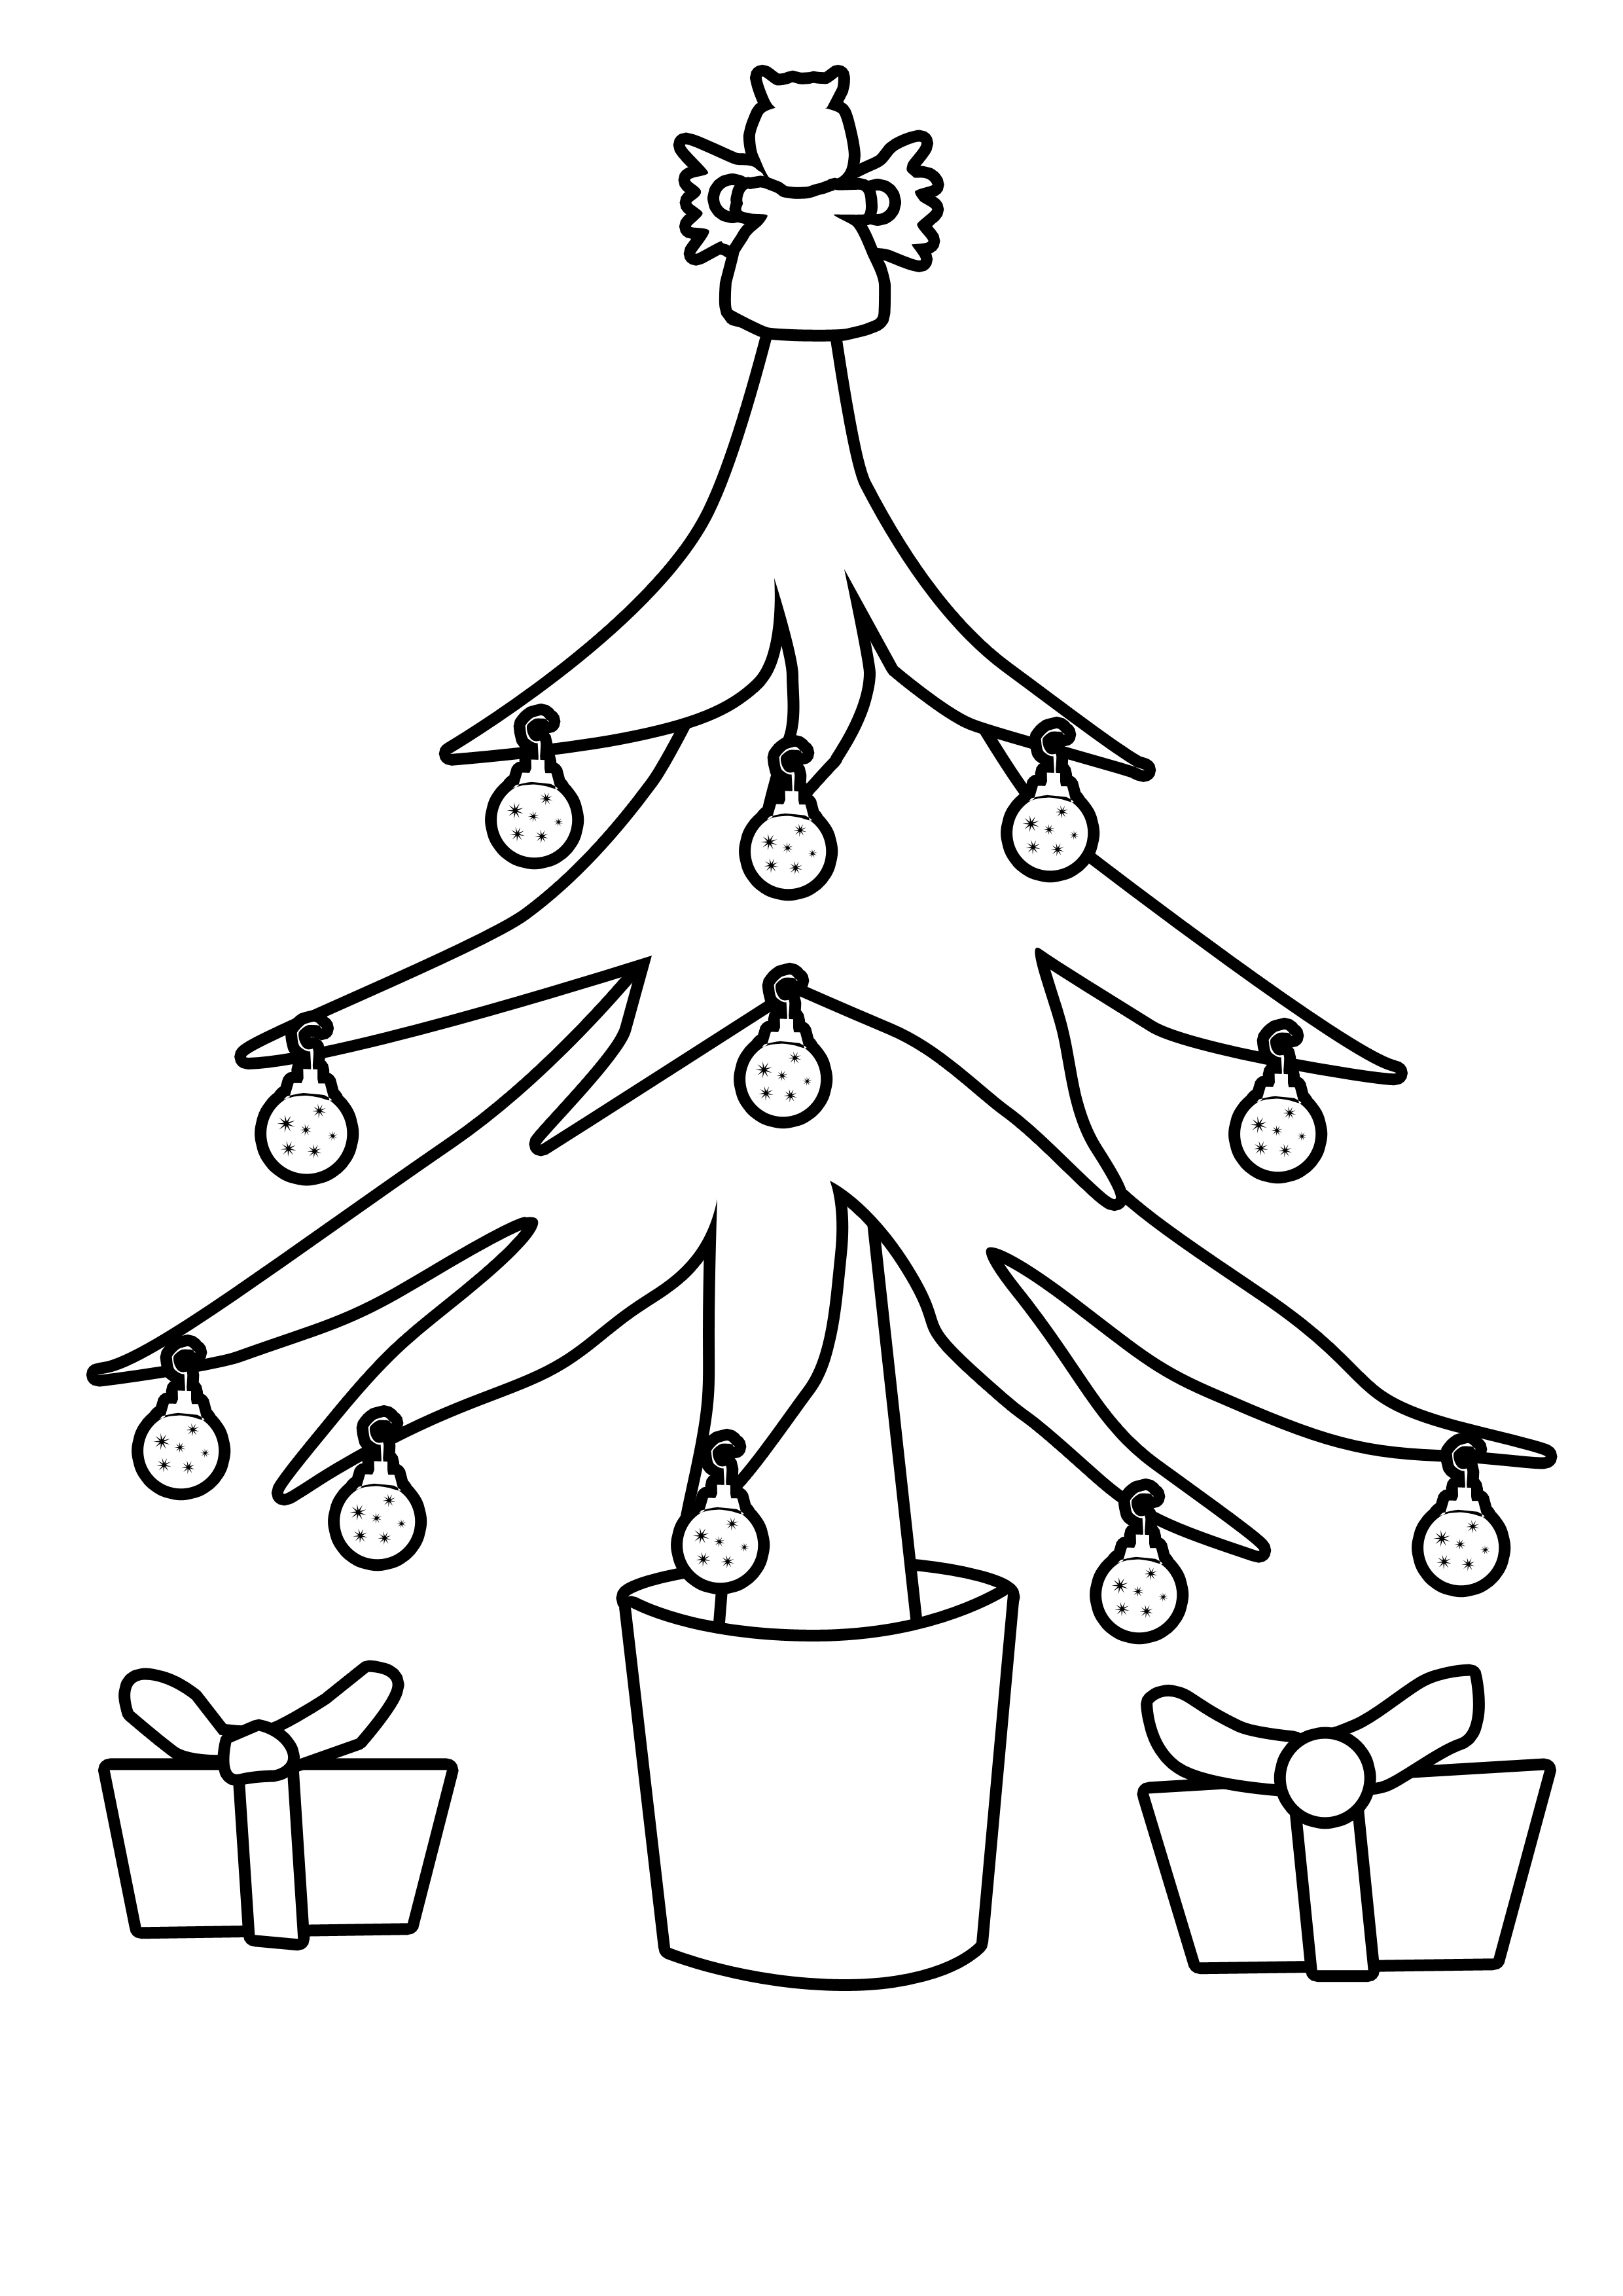 Tree outline, Christmas cakes and Christmas trees